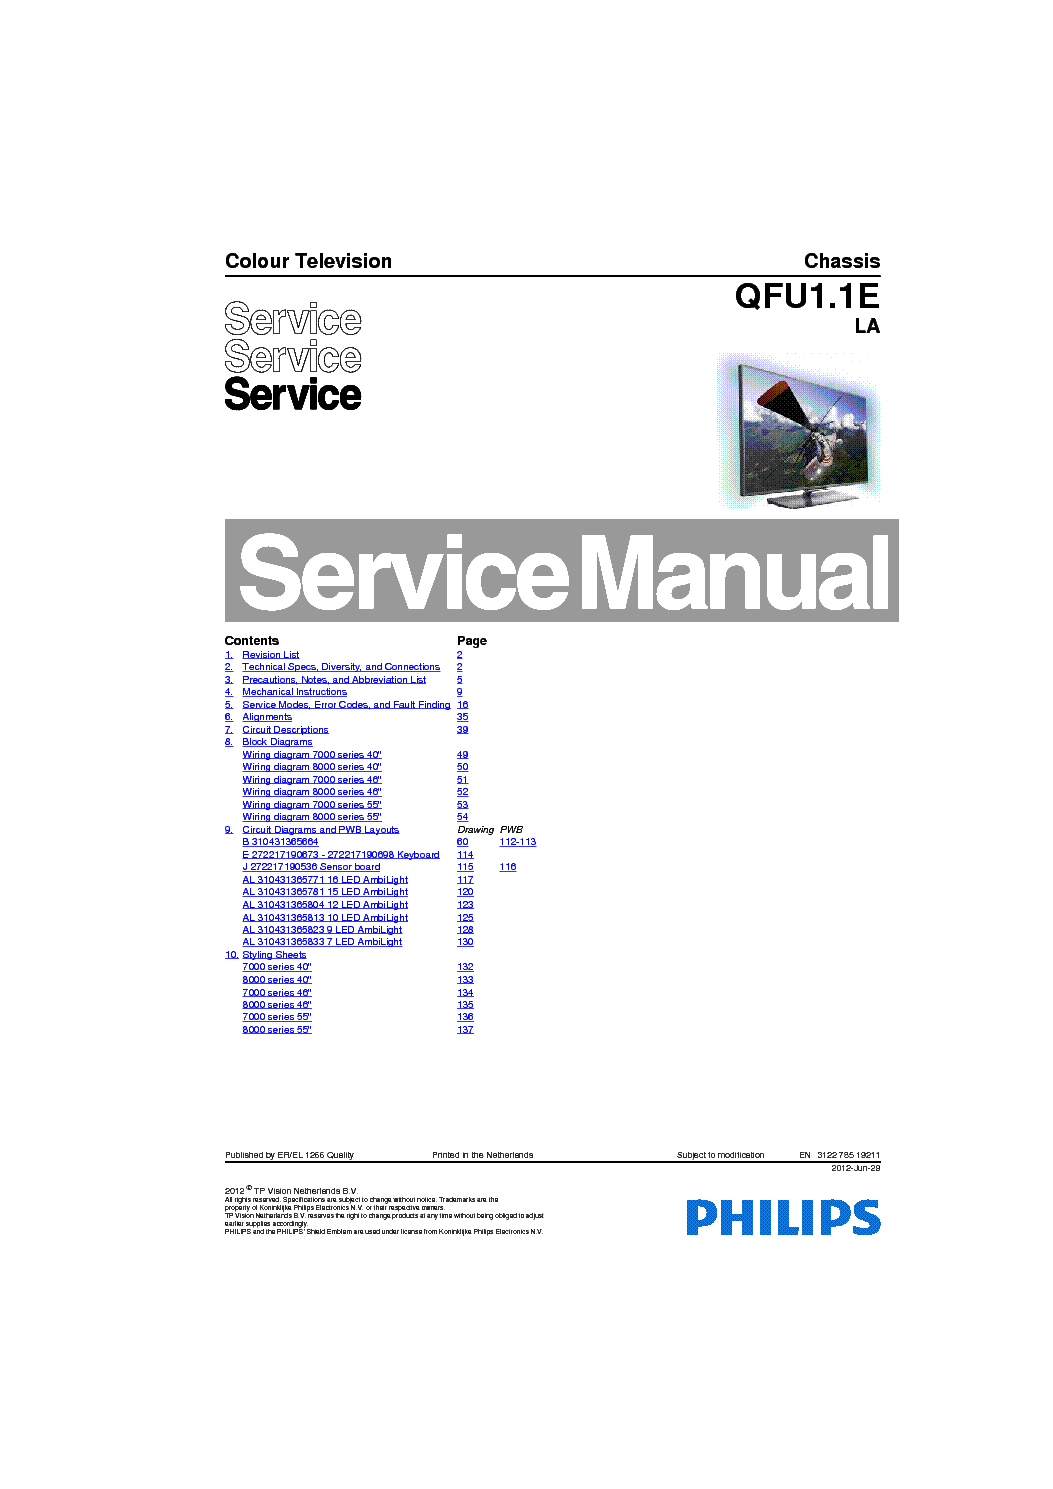 PHILIPS QFU1.1ELA 312278519211 CHASSIS service manual (1st page)